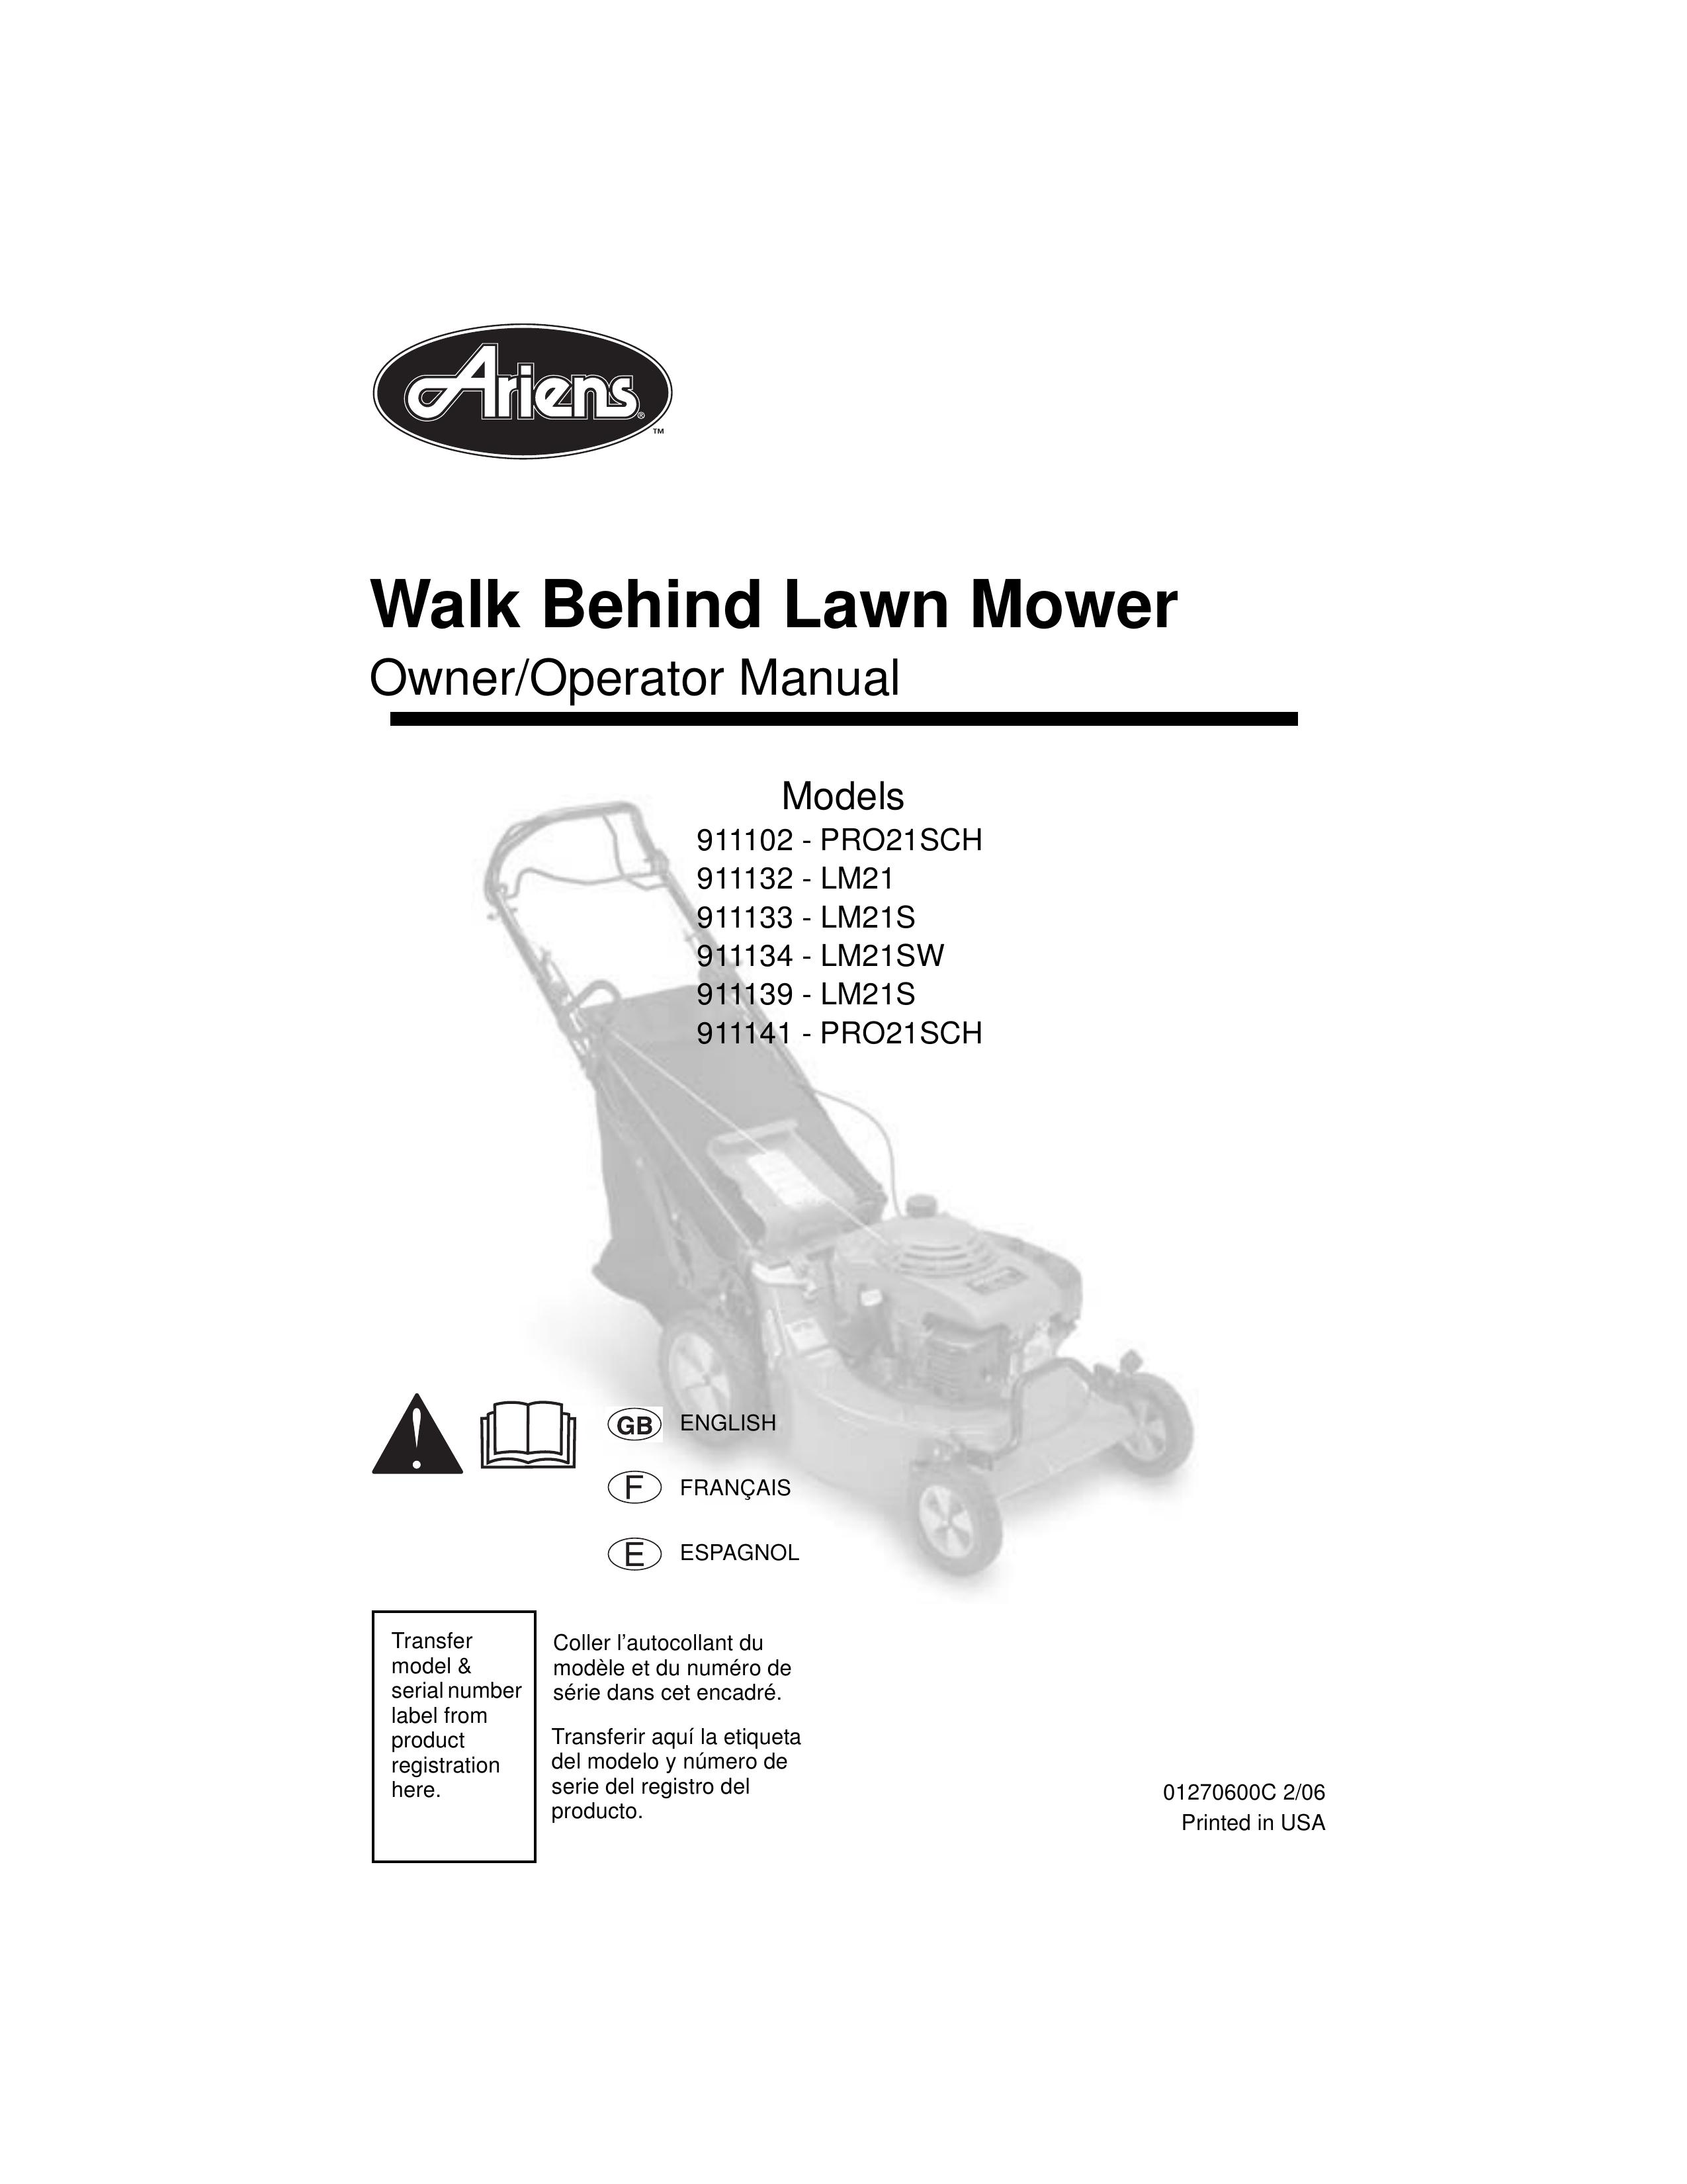 Ariens 911102 - PRO21SCH Lawn Mower User Manual